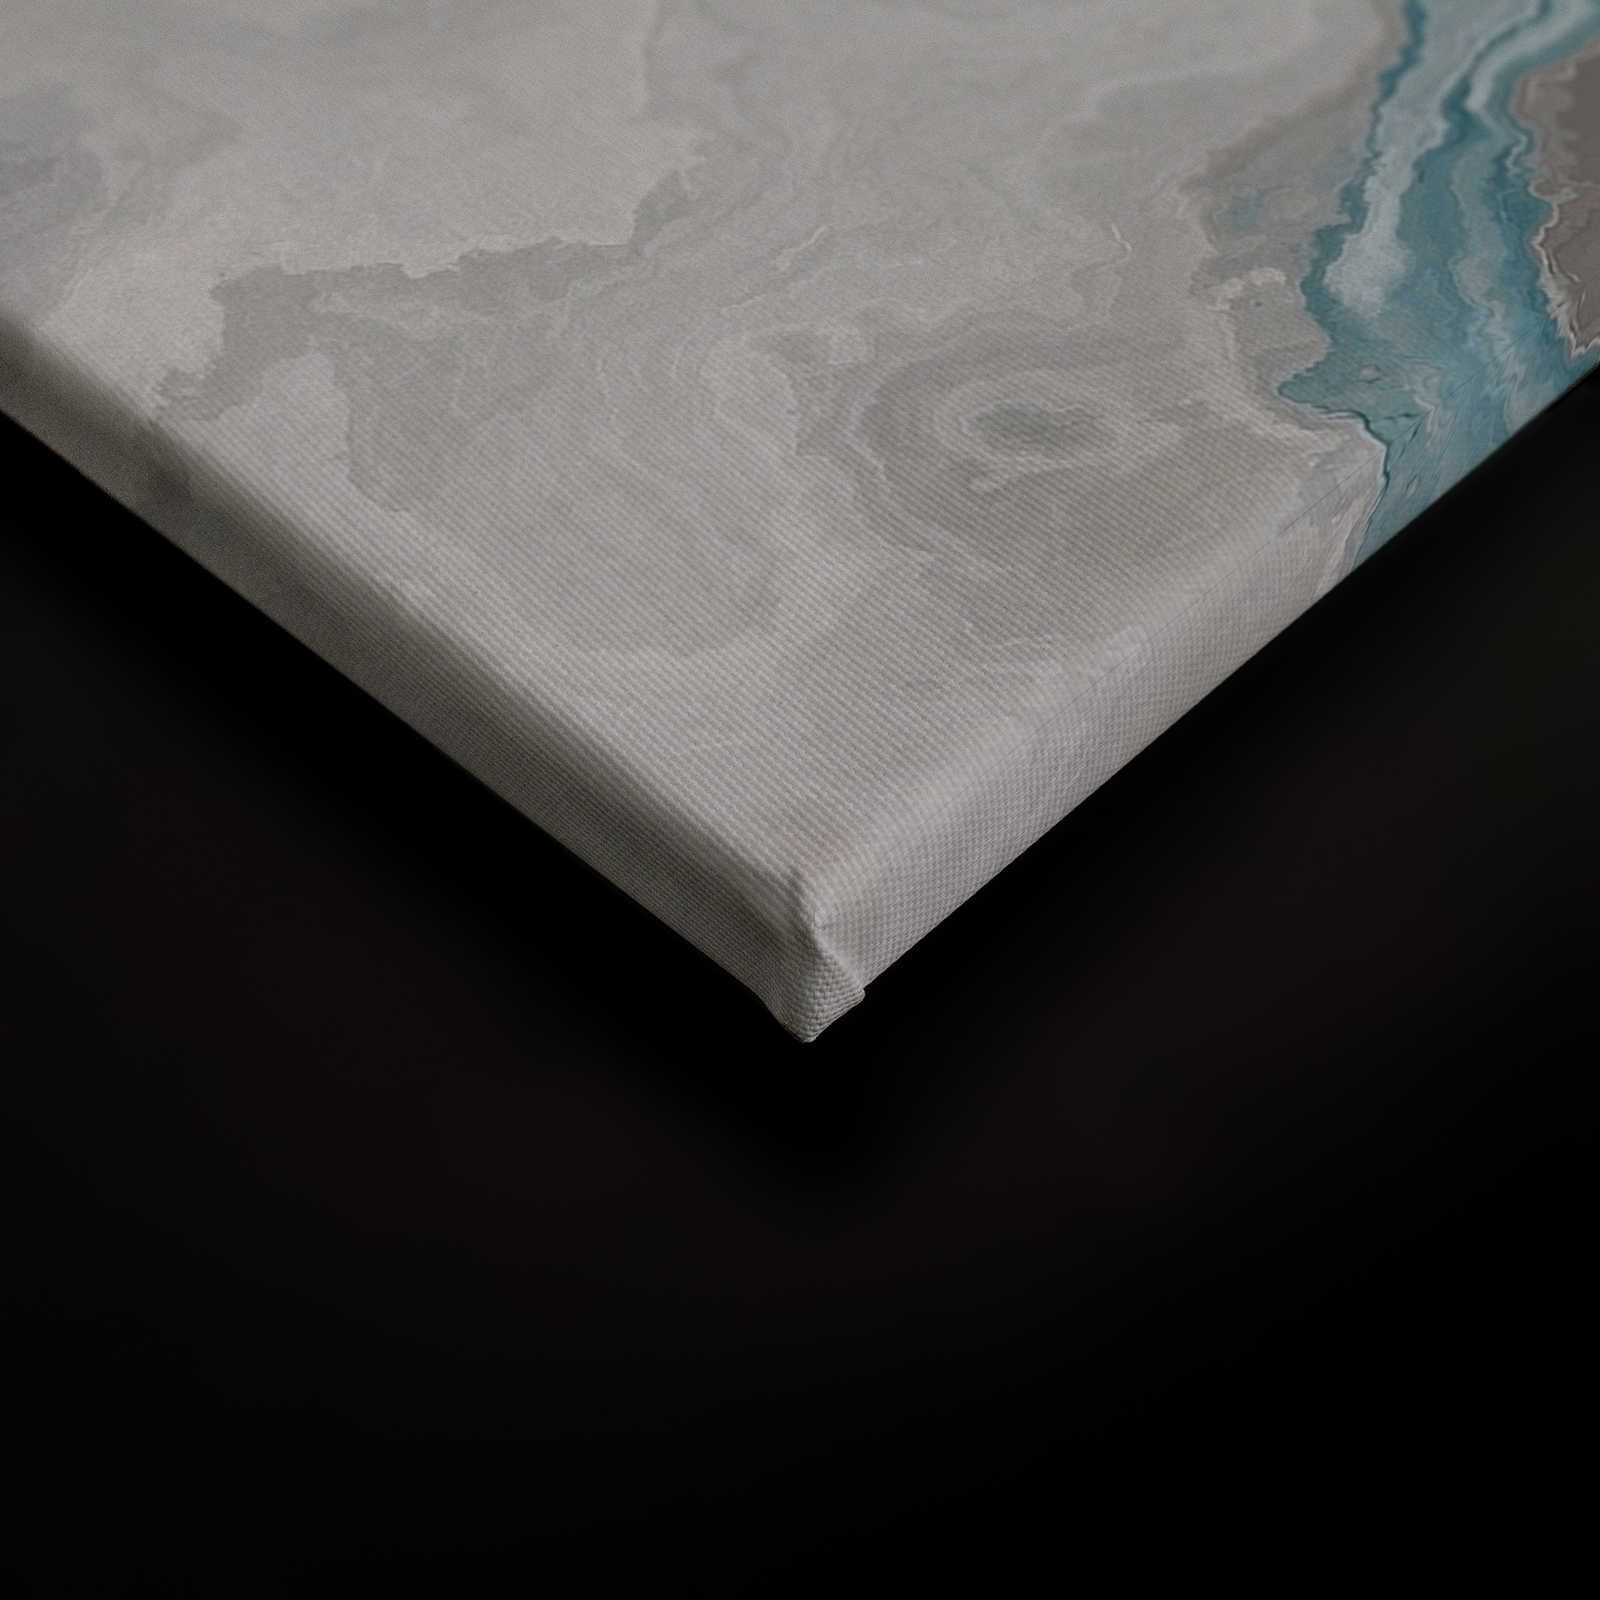             Leinwandbild marmoriert mit Quarz-Optik – 1,20 m x 0,80 m
        